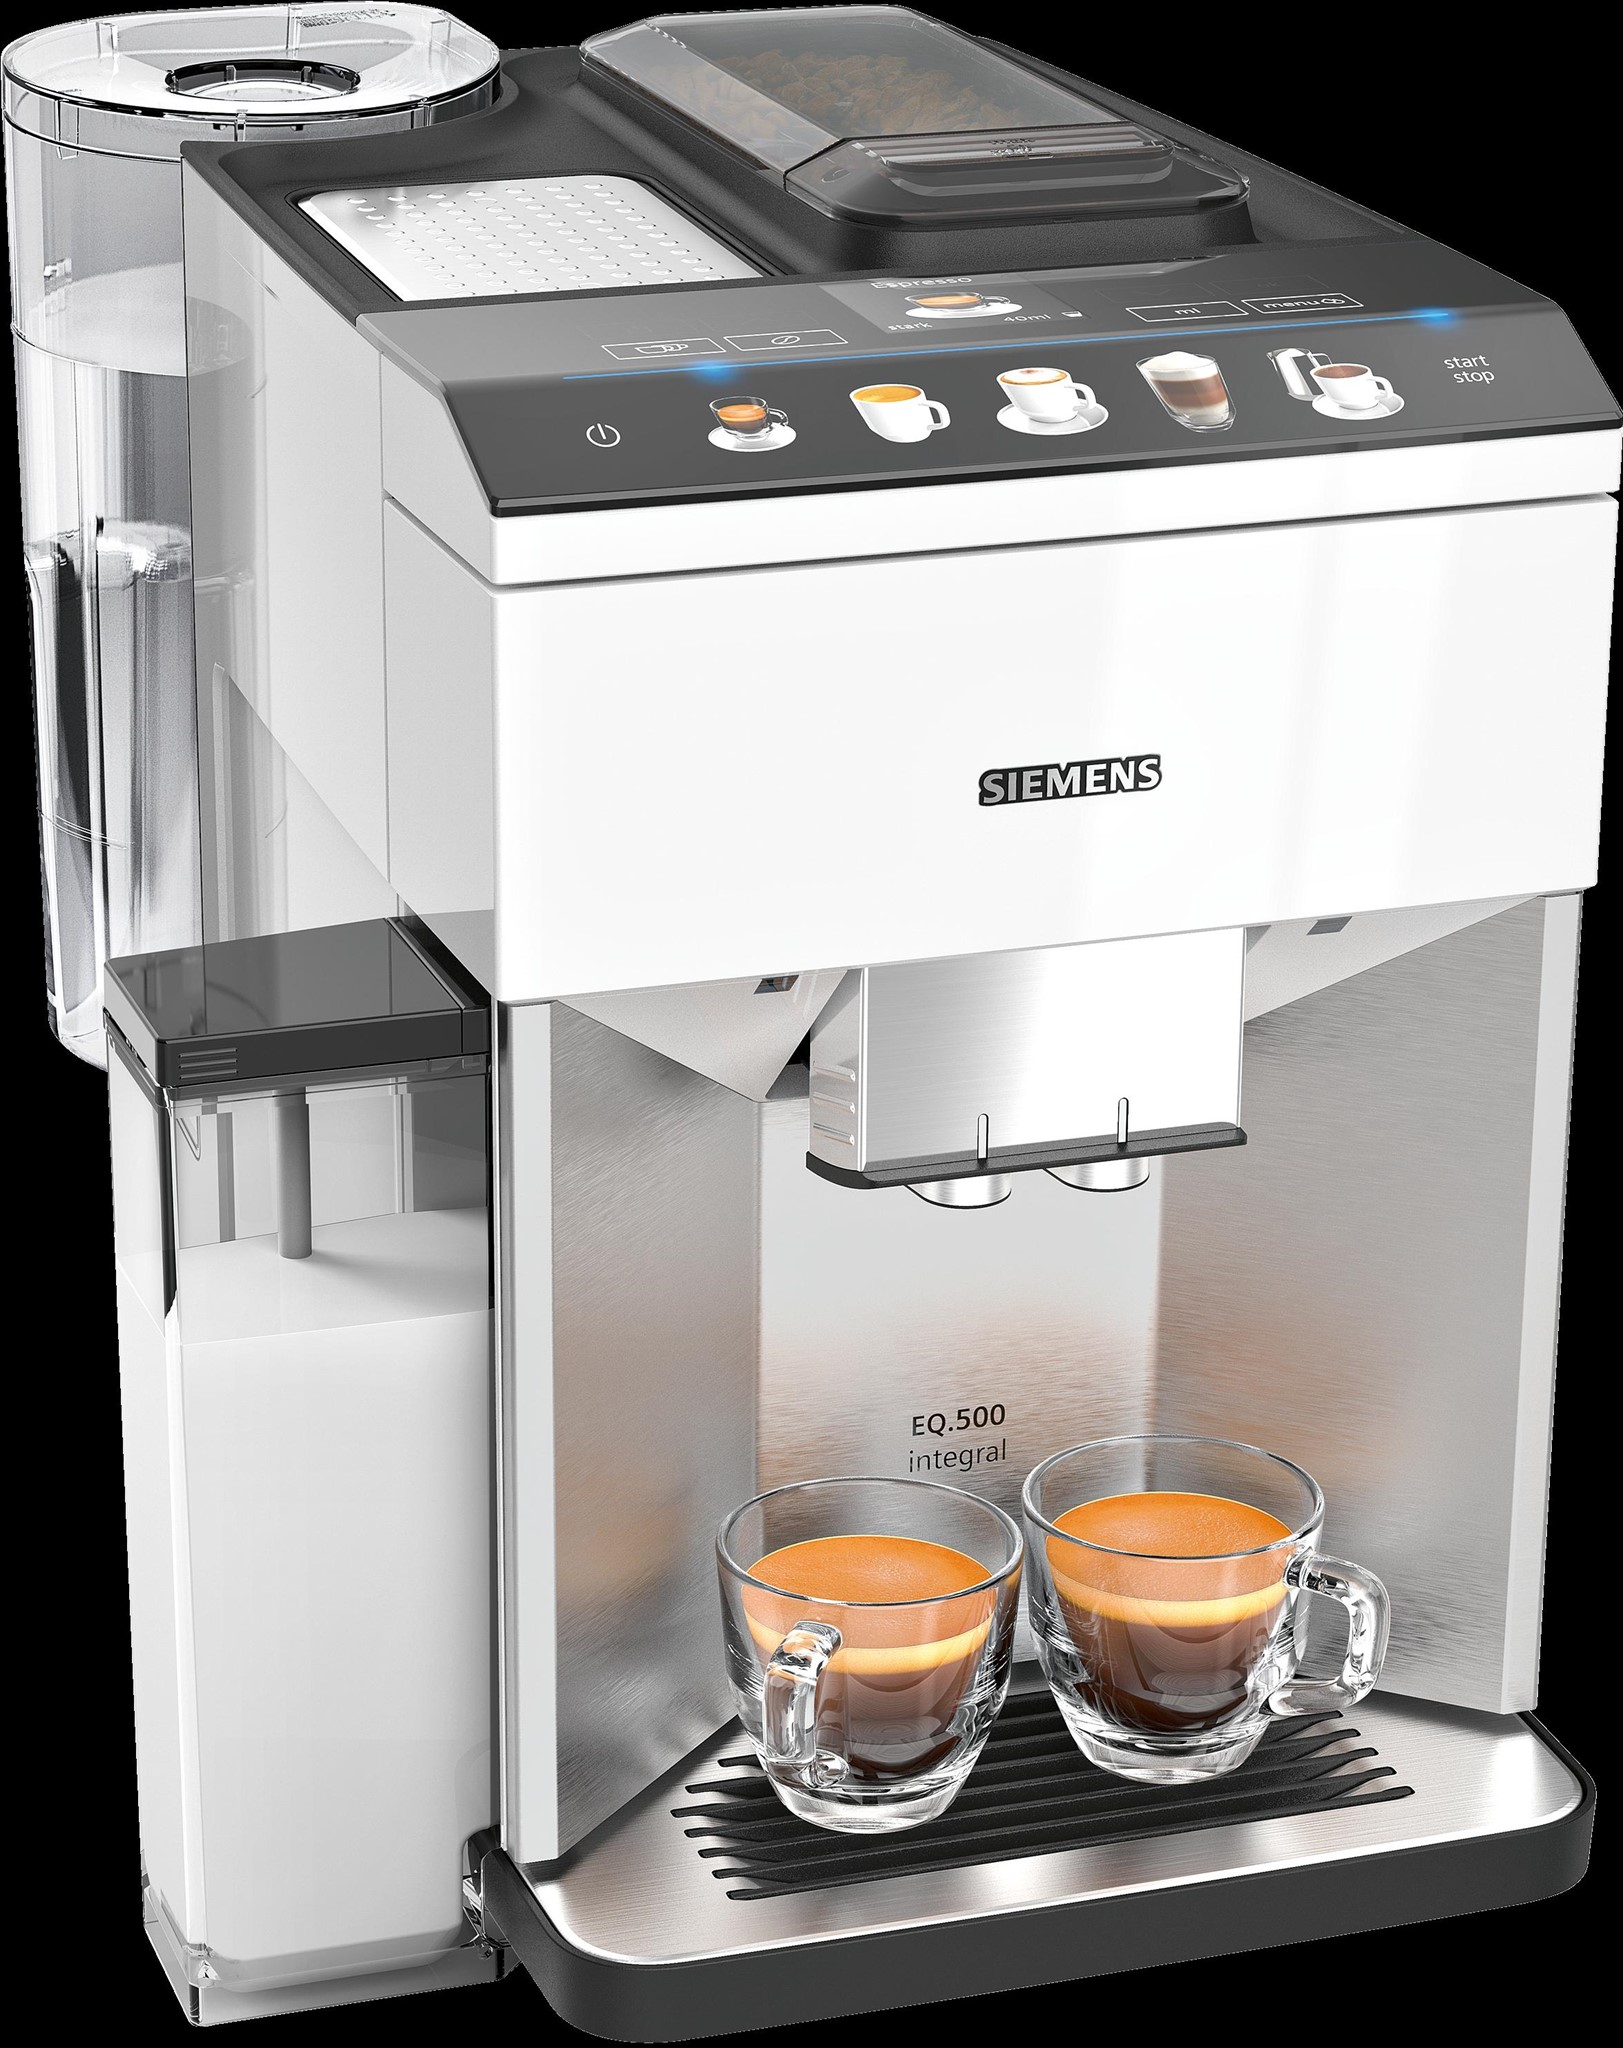 Kaffee-Vollautomat GmbH integral EQ.500 Siemens 4242003837467-Silvertech Edelstahl, TQ507D02,